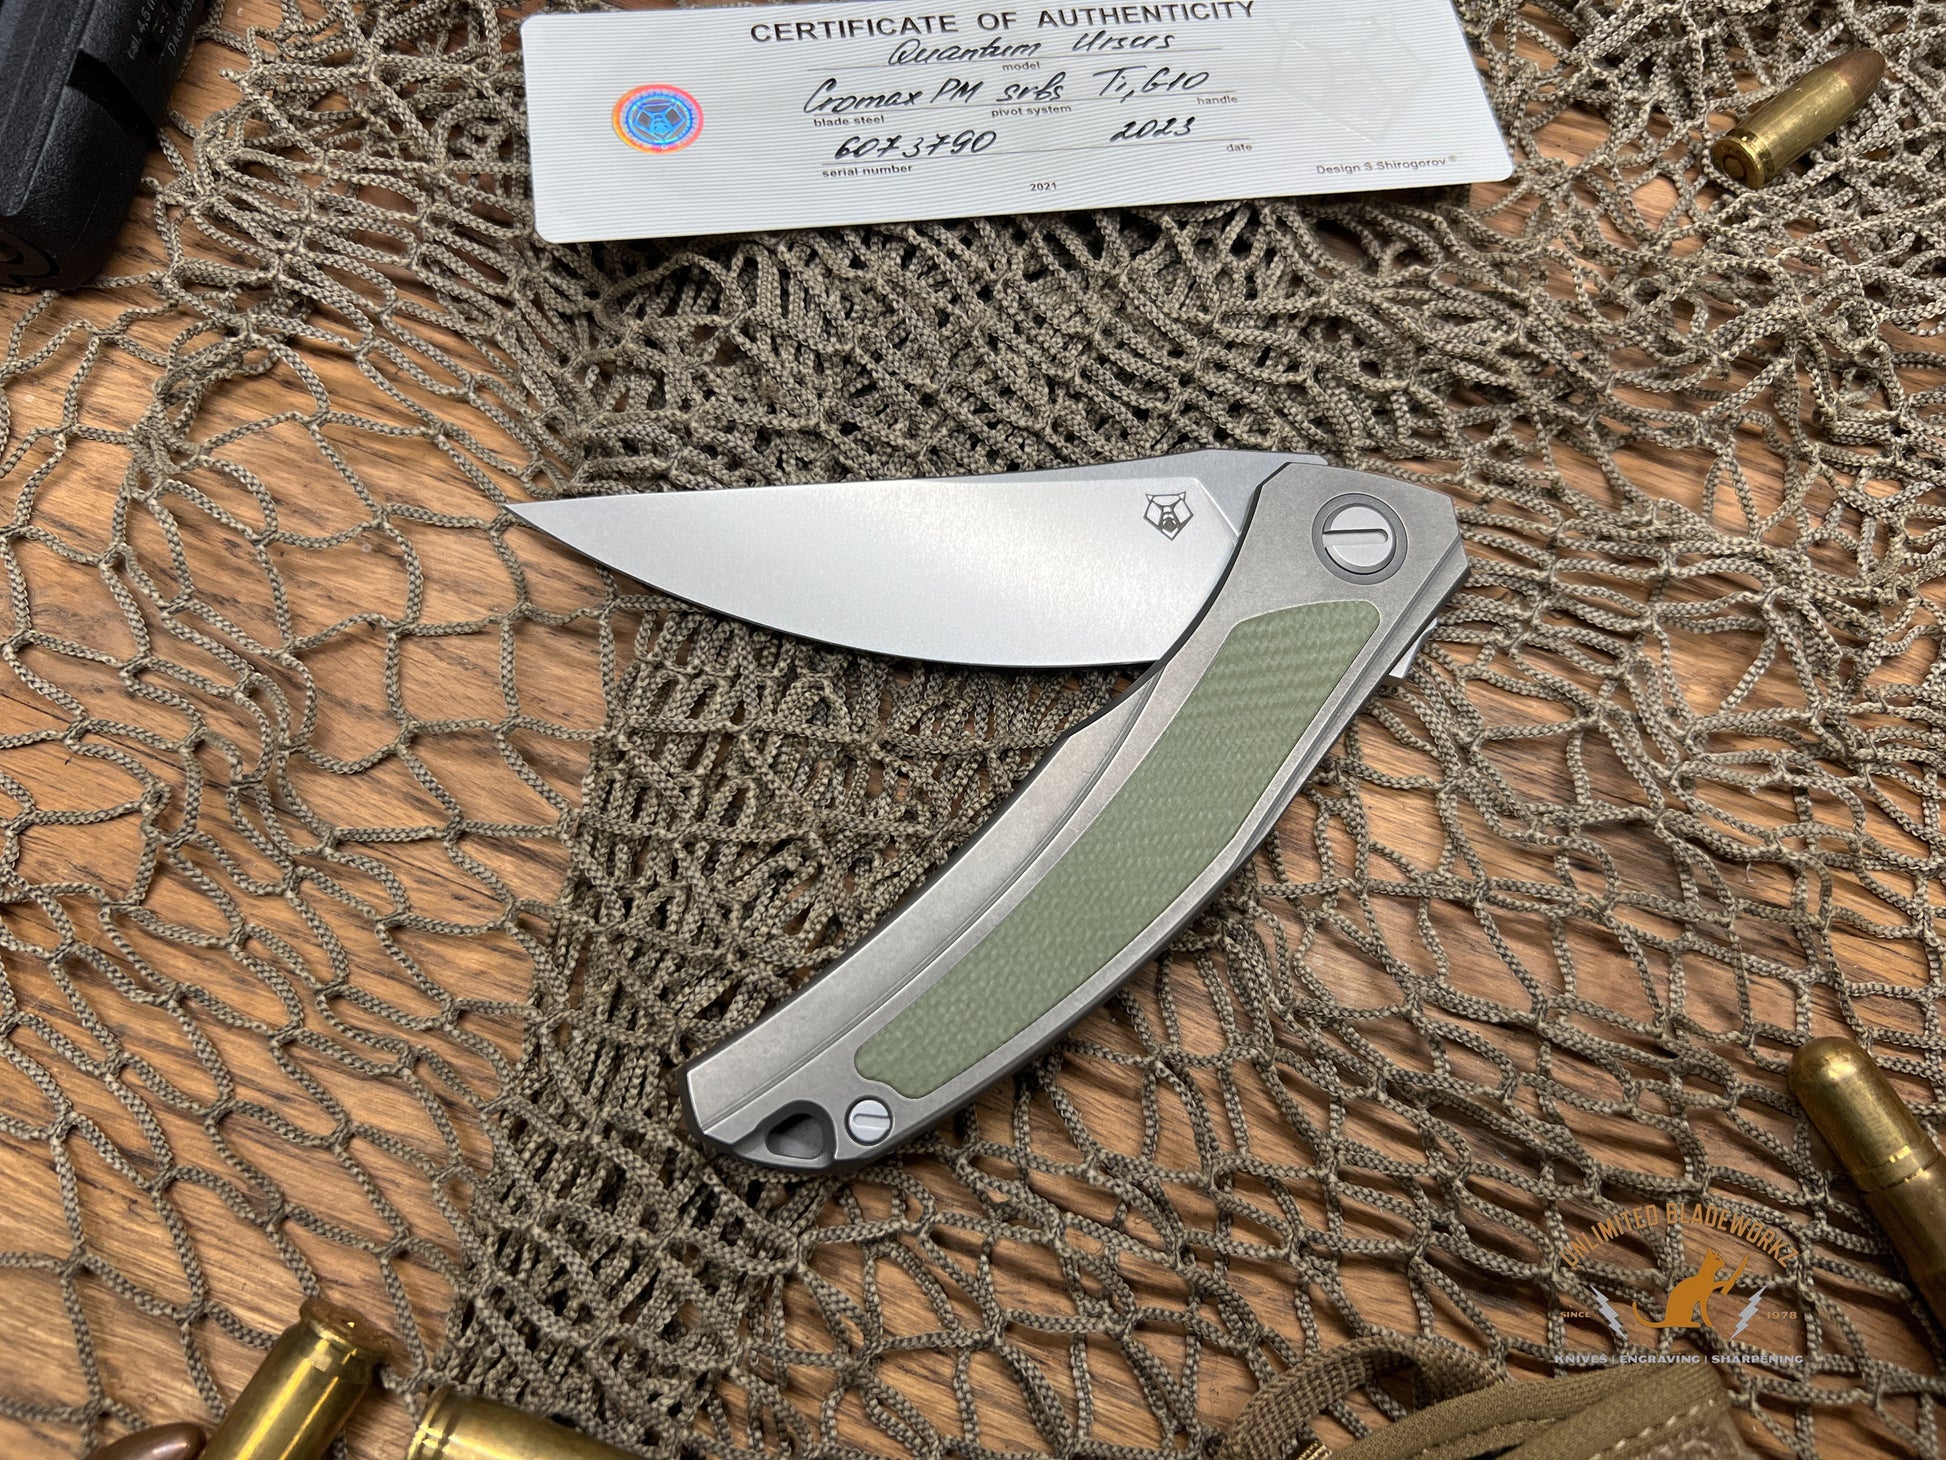 Shirogorov Quantum Ursus Left Handed Flipper Knife 3.8 Cromax PM